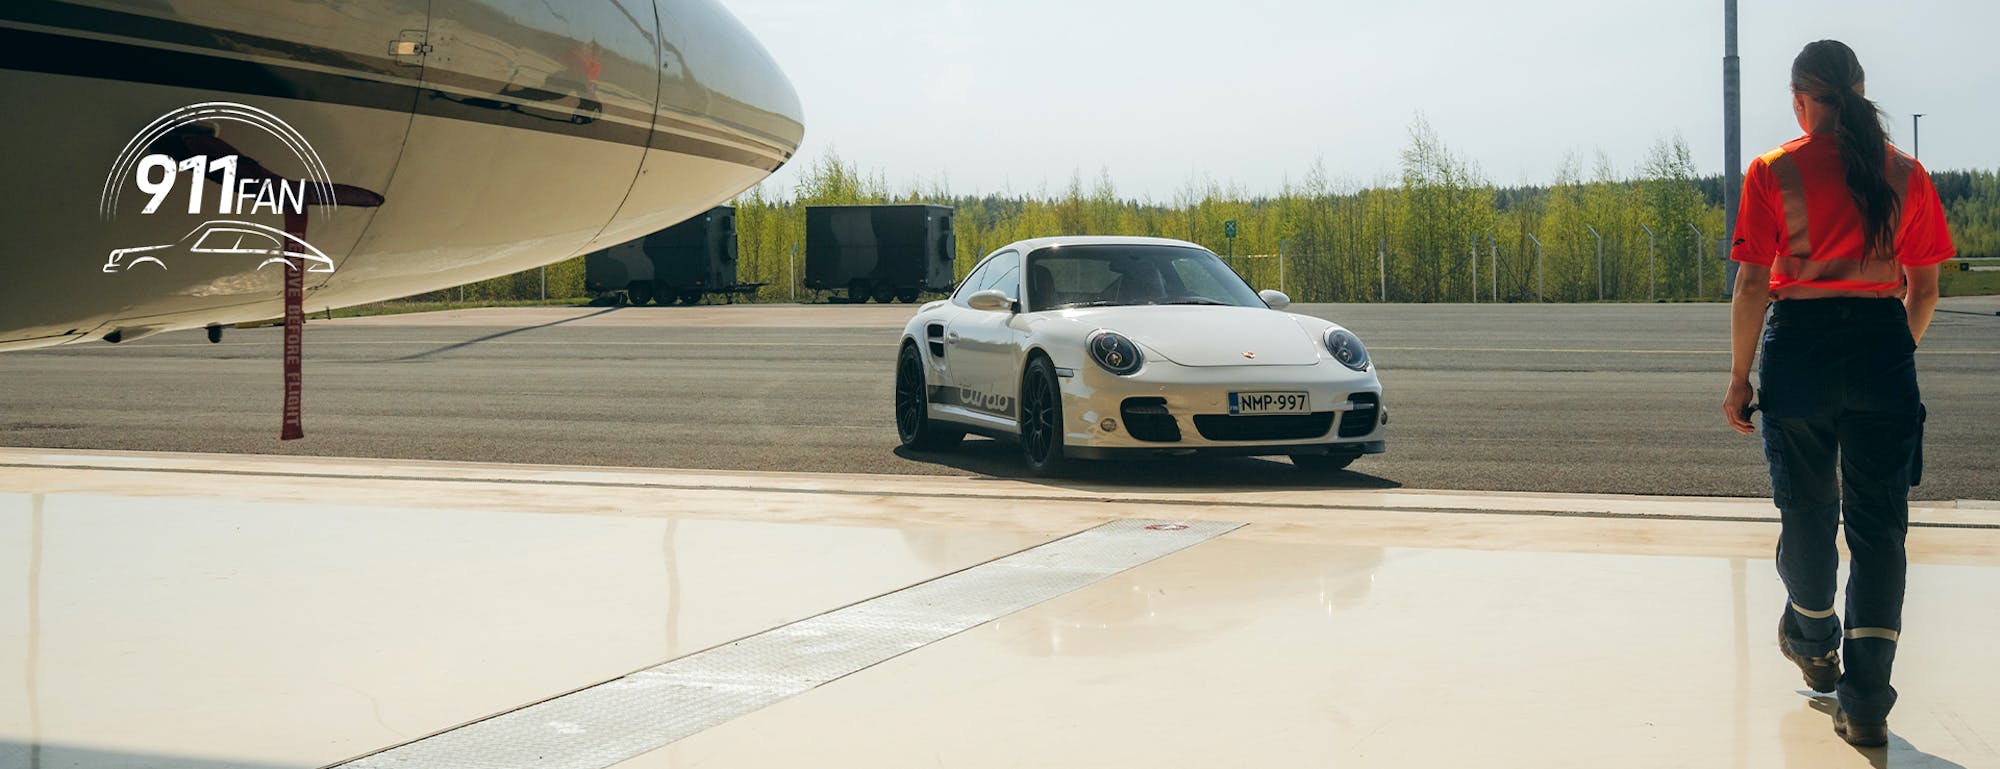 Woman walking towards white Porsche 911 with aeroplane in hangar